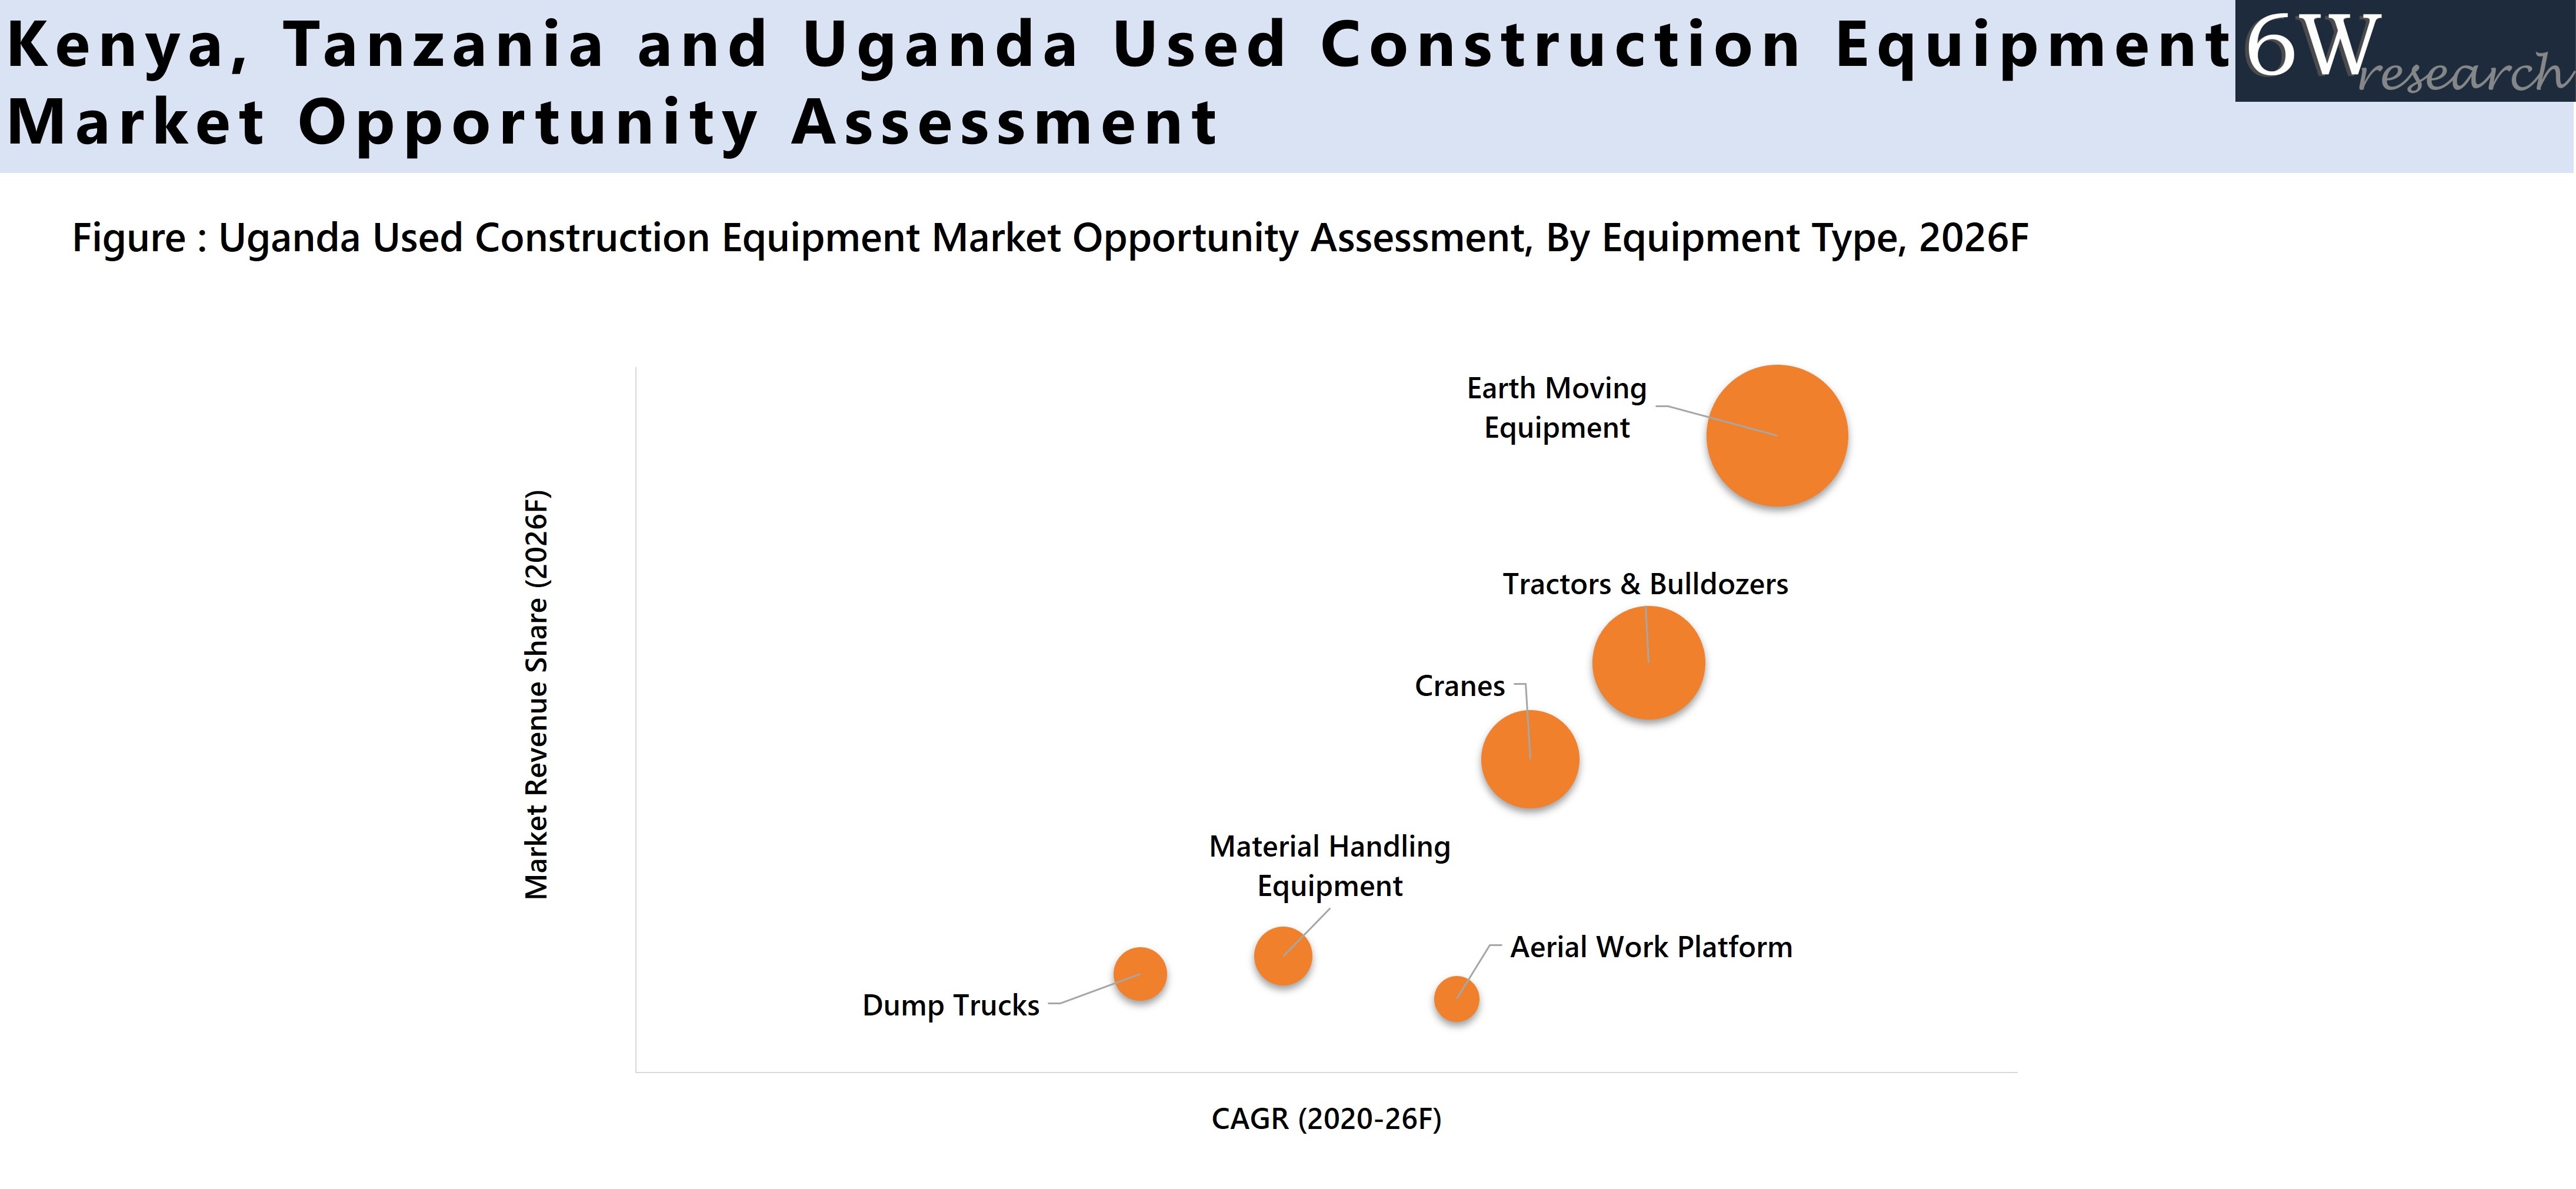 Kenya, Tanzania and Uganda Used Construction Equipment Market Opportunity Assessment